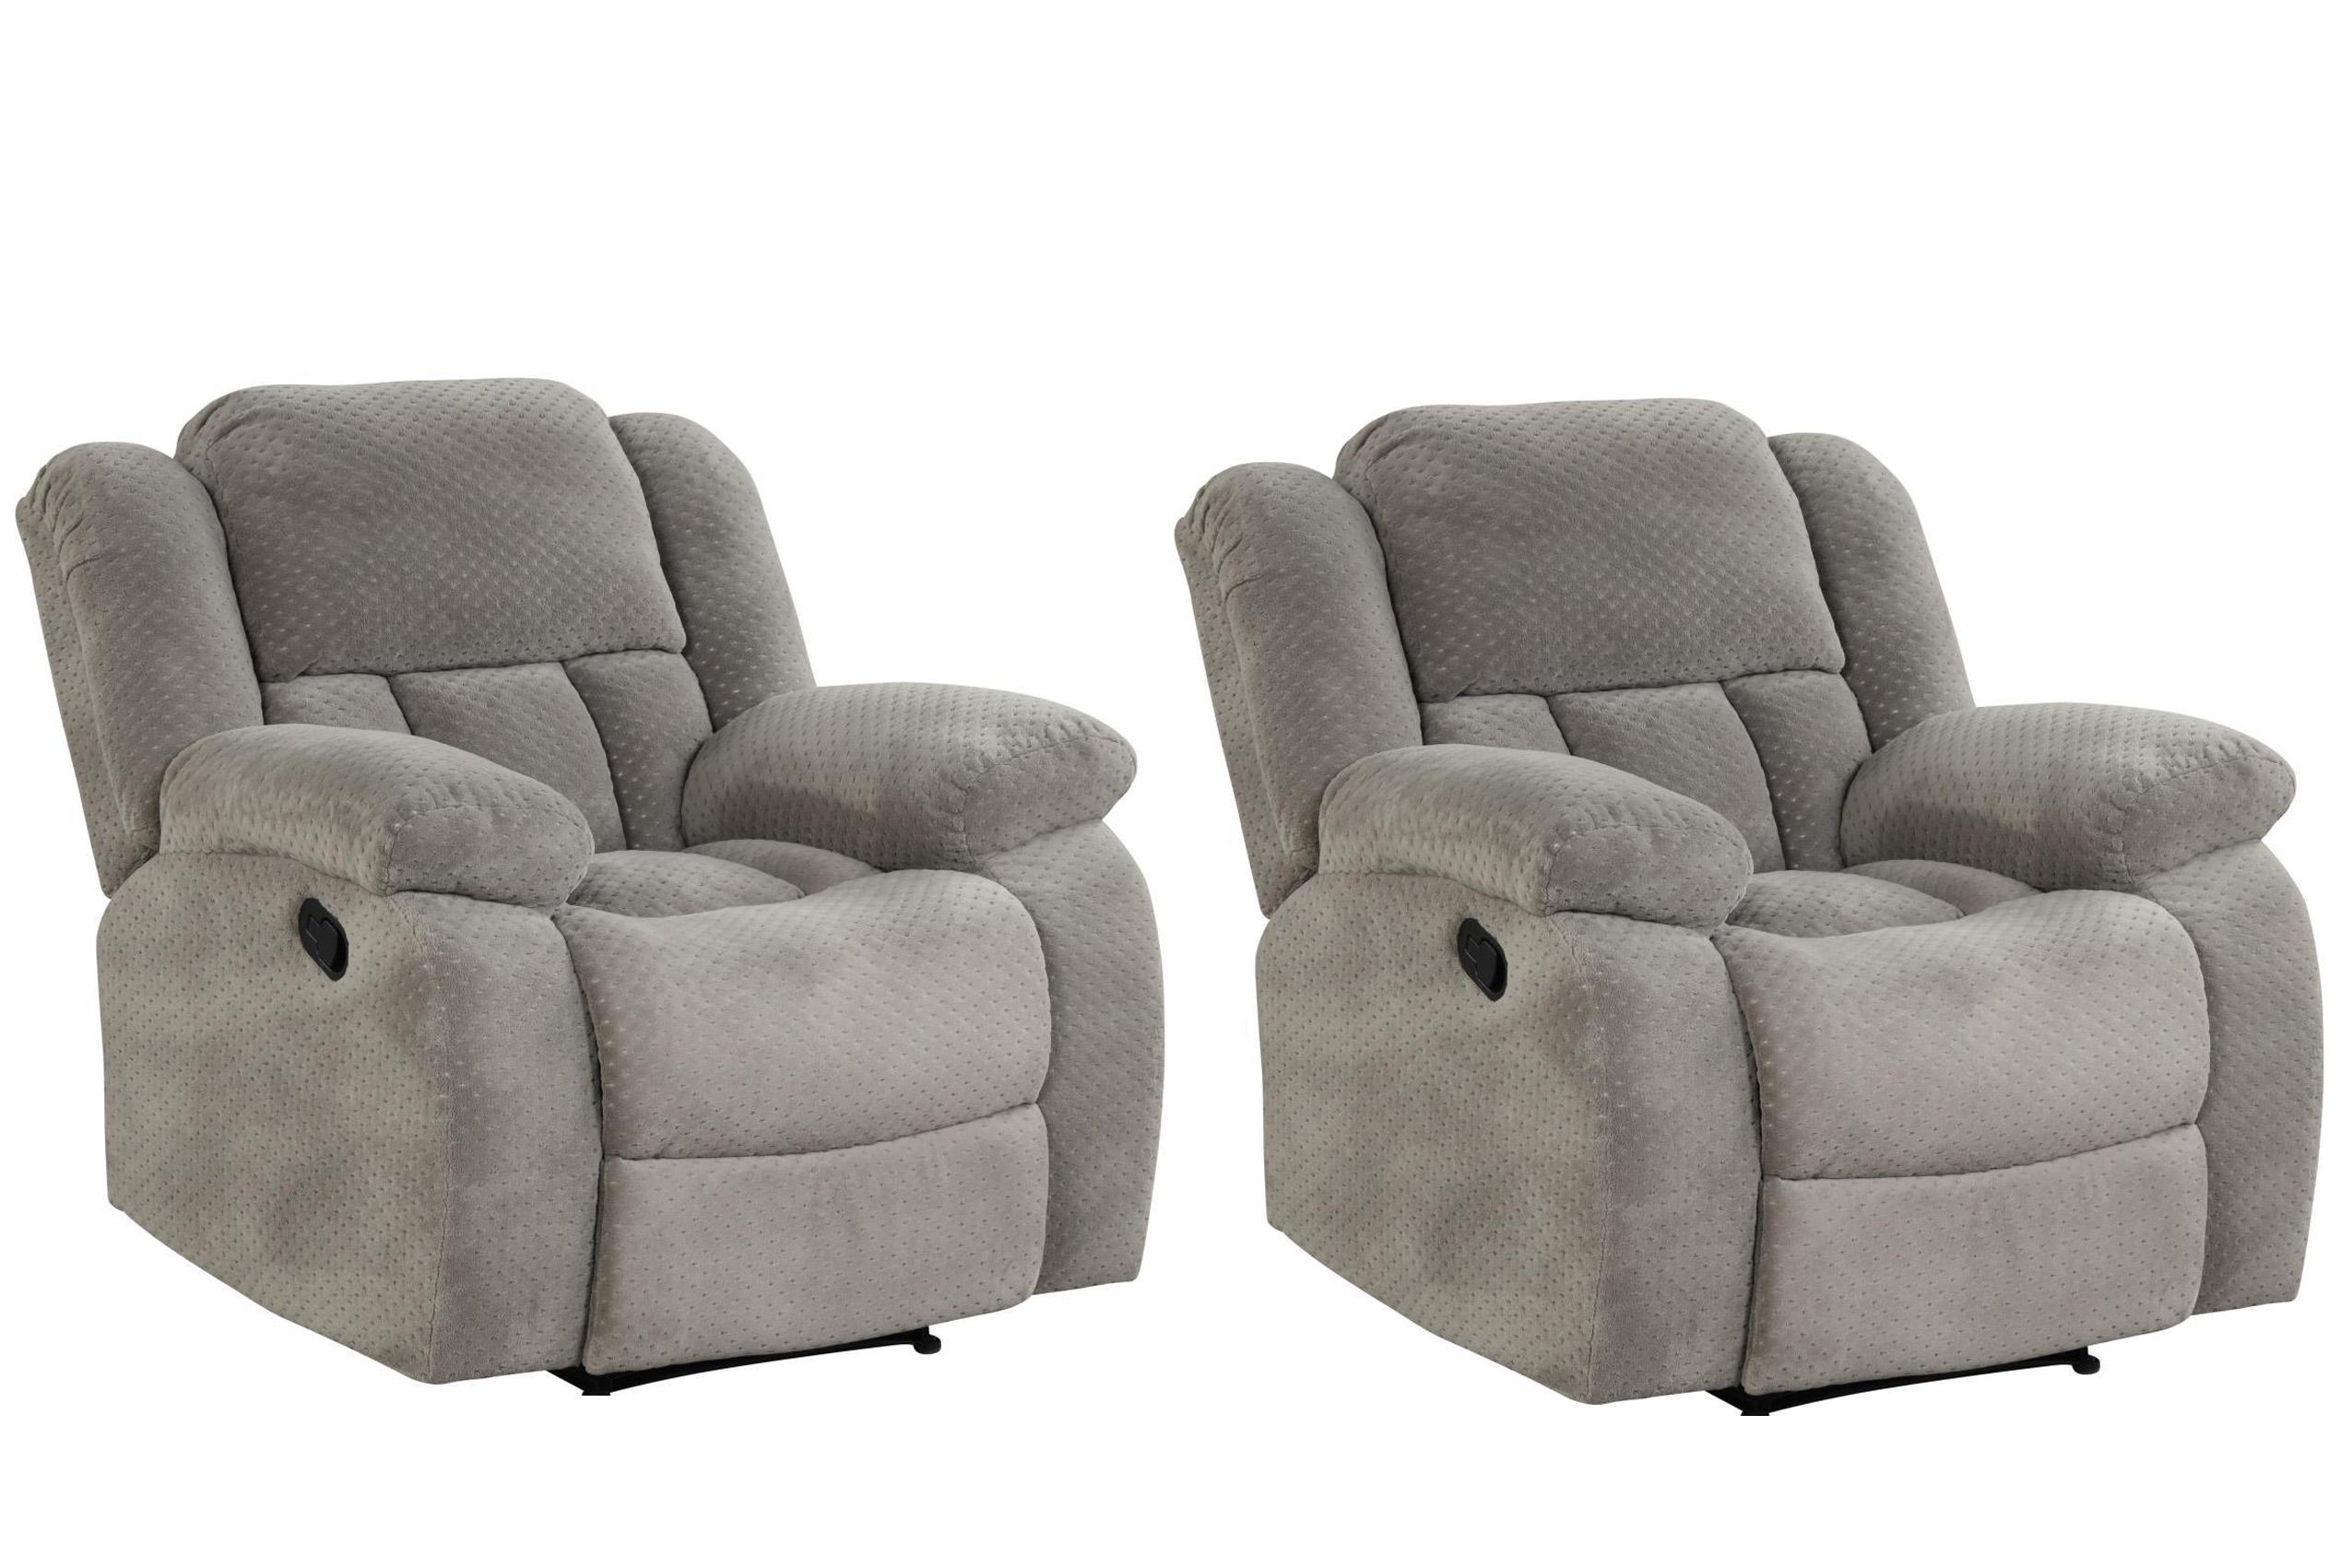 Galaxy Home Furniture ARMADA Ice Gray Recliner Chair Set